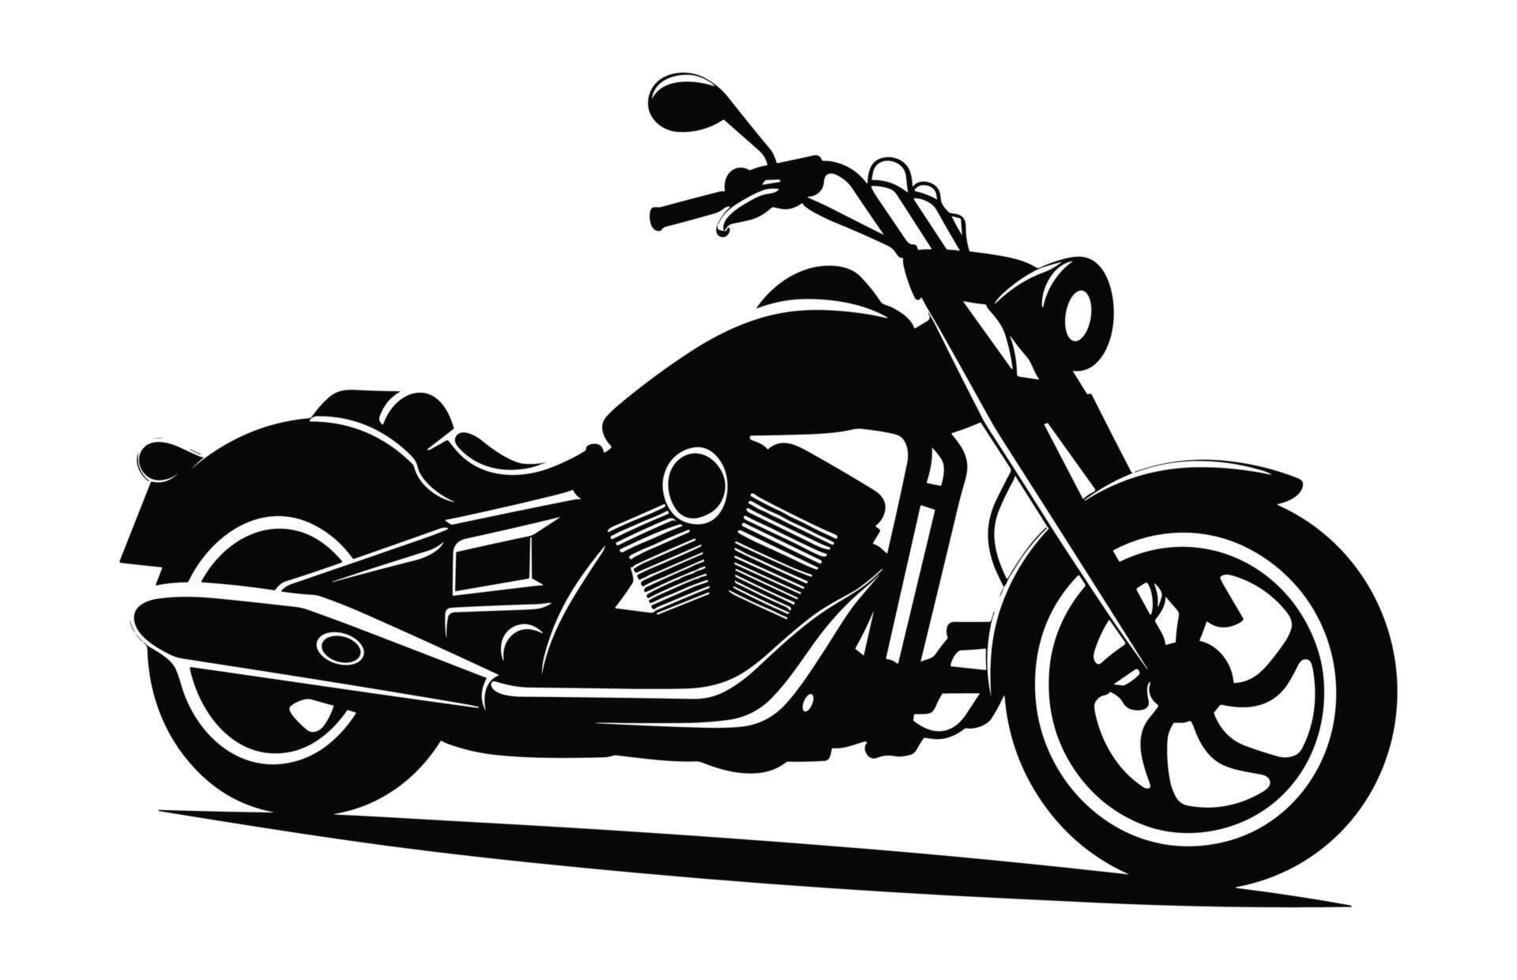 motocicleta silueta vector negro y blanco aislado en un blanco fondo, moto silueta clipart